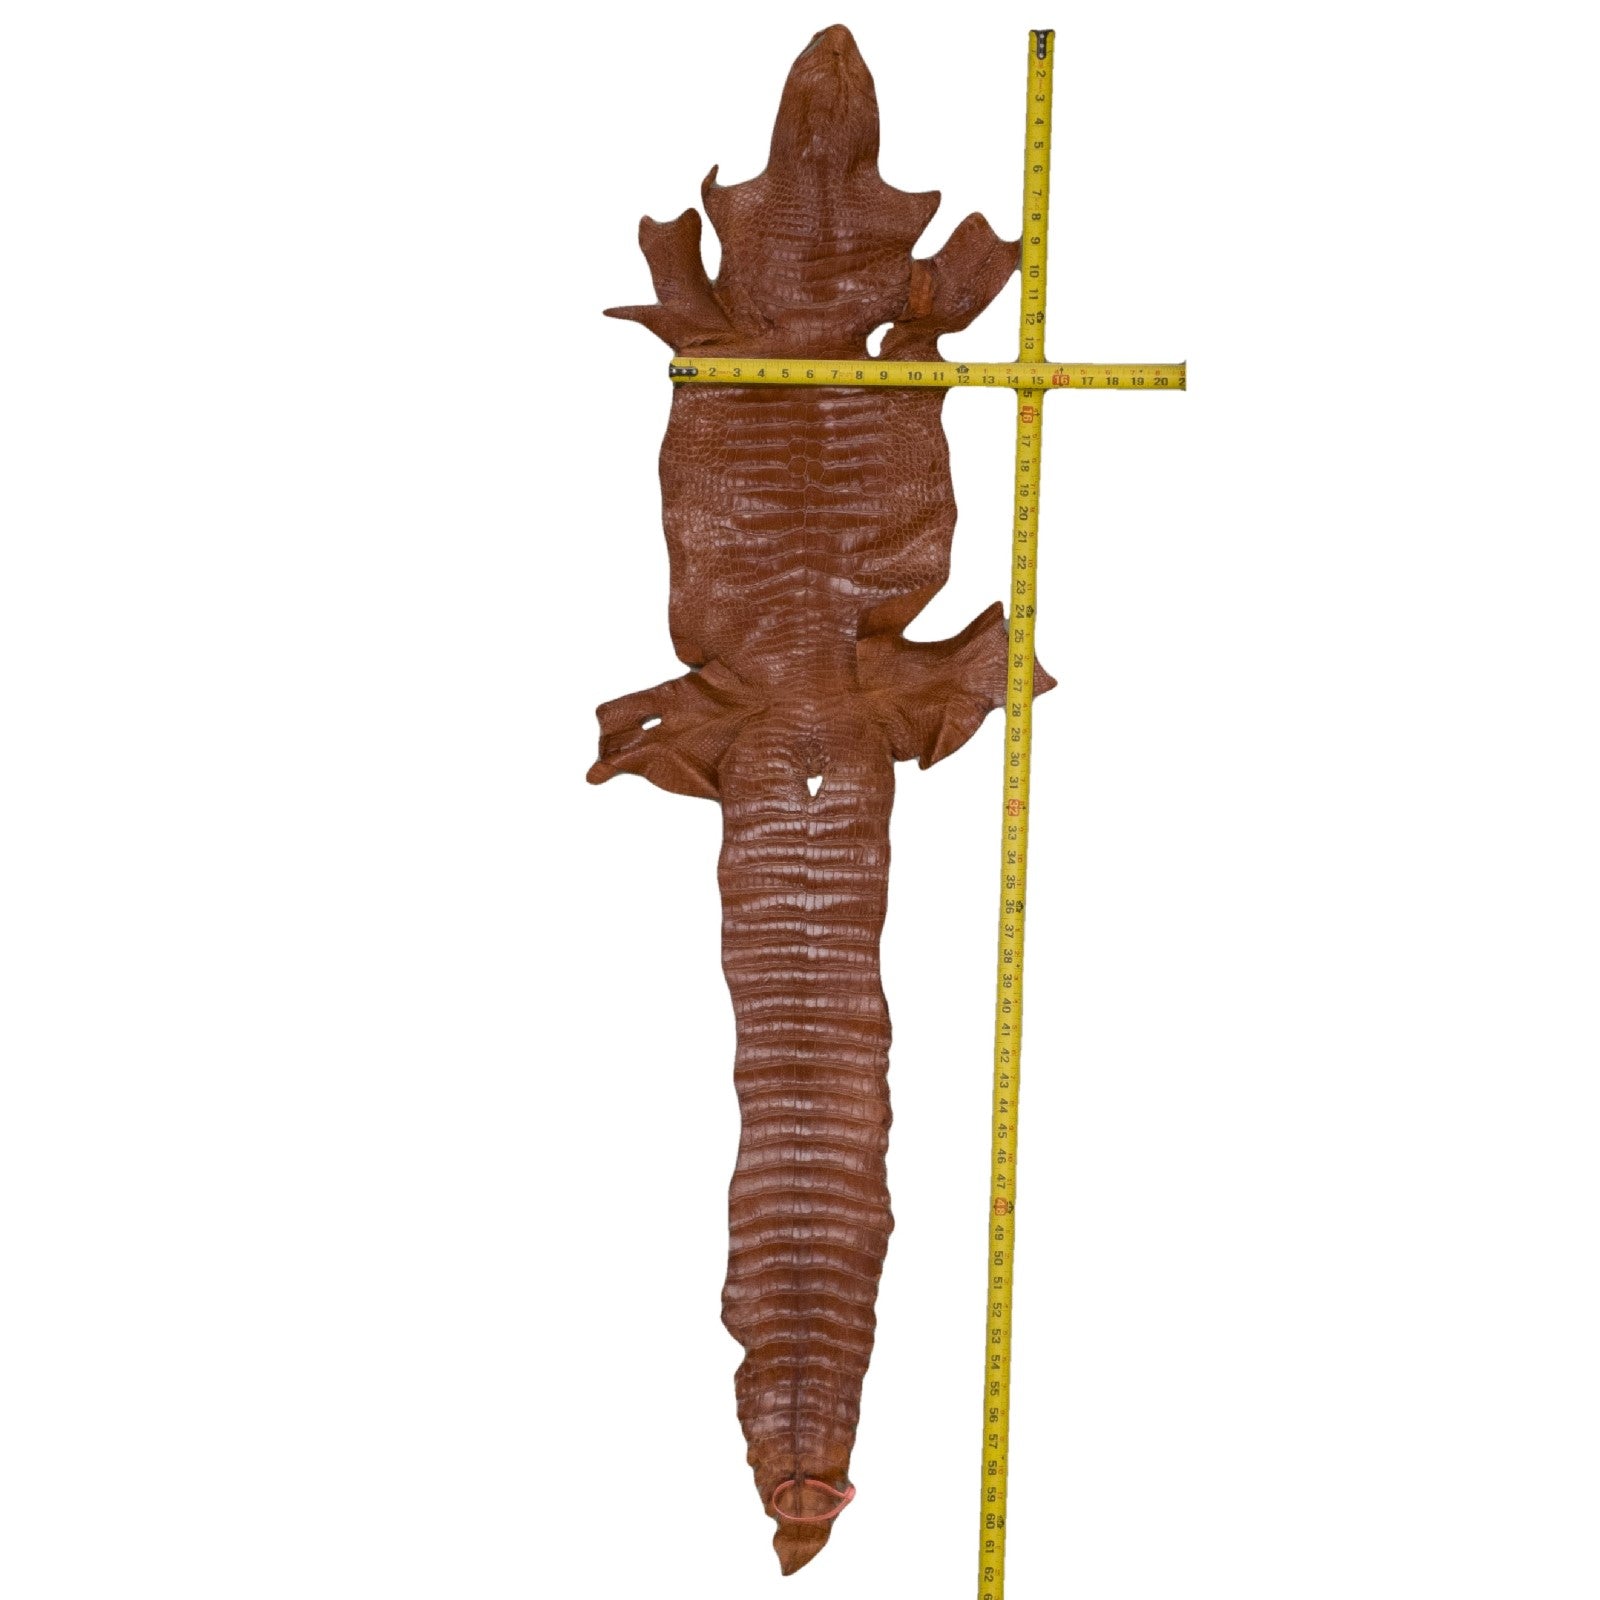 Alligator Skin Belly Matte Red 30/34 cm